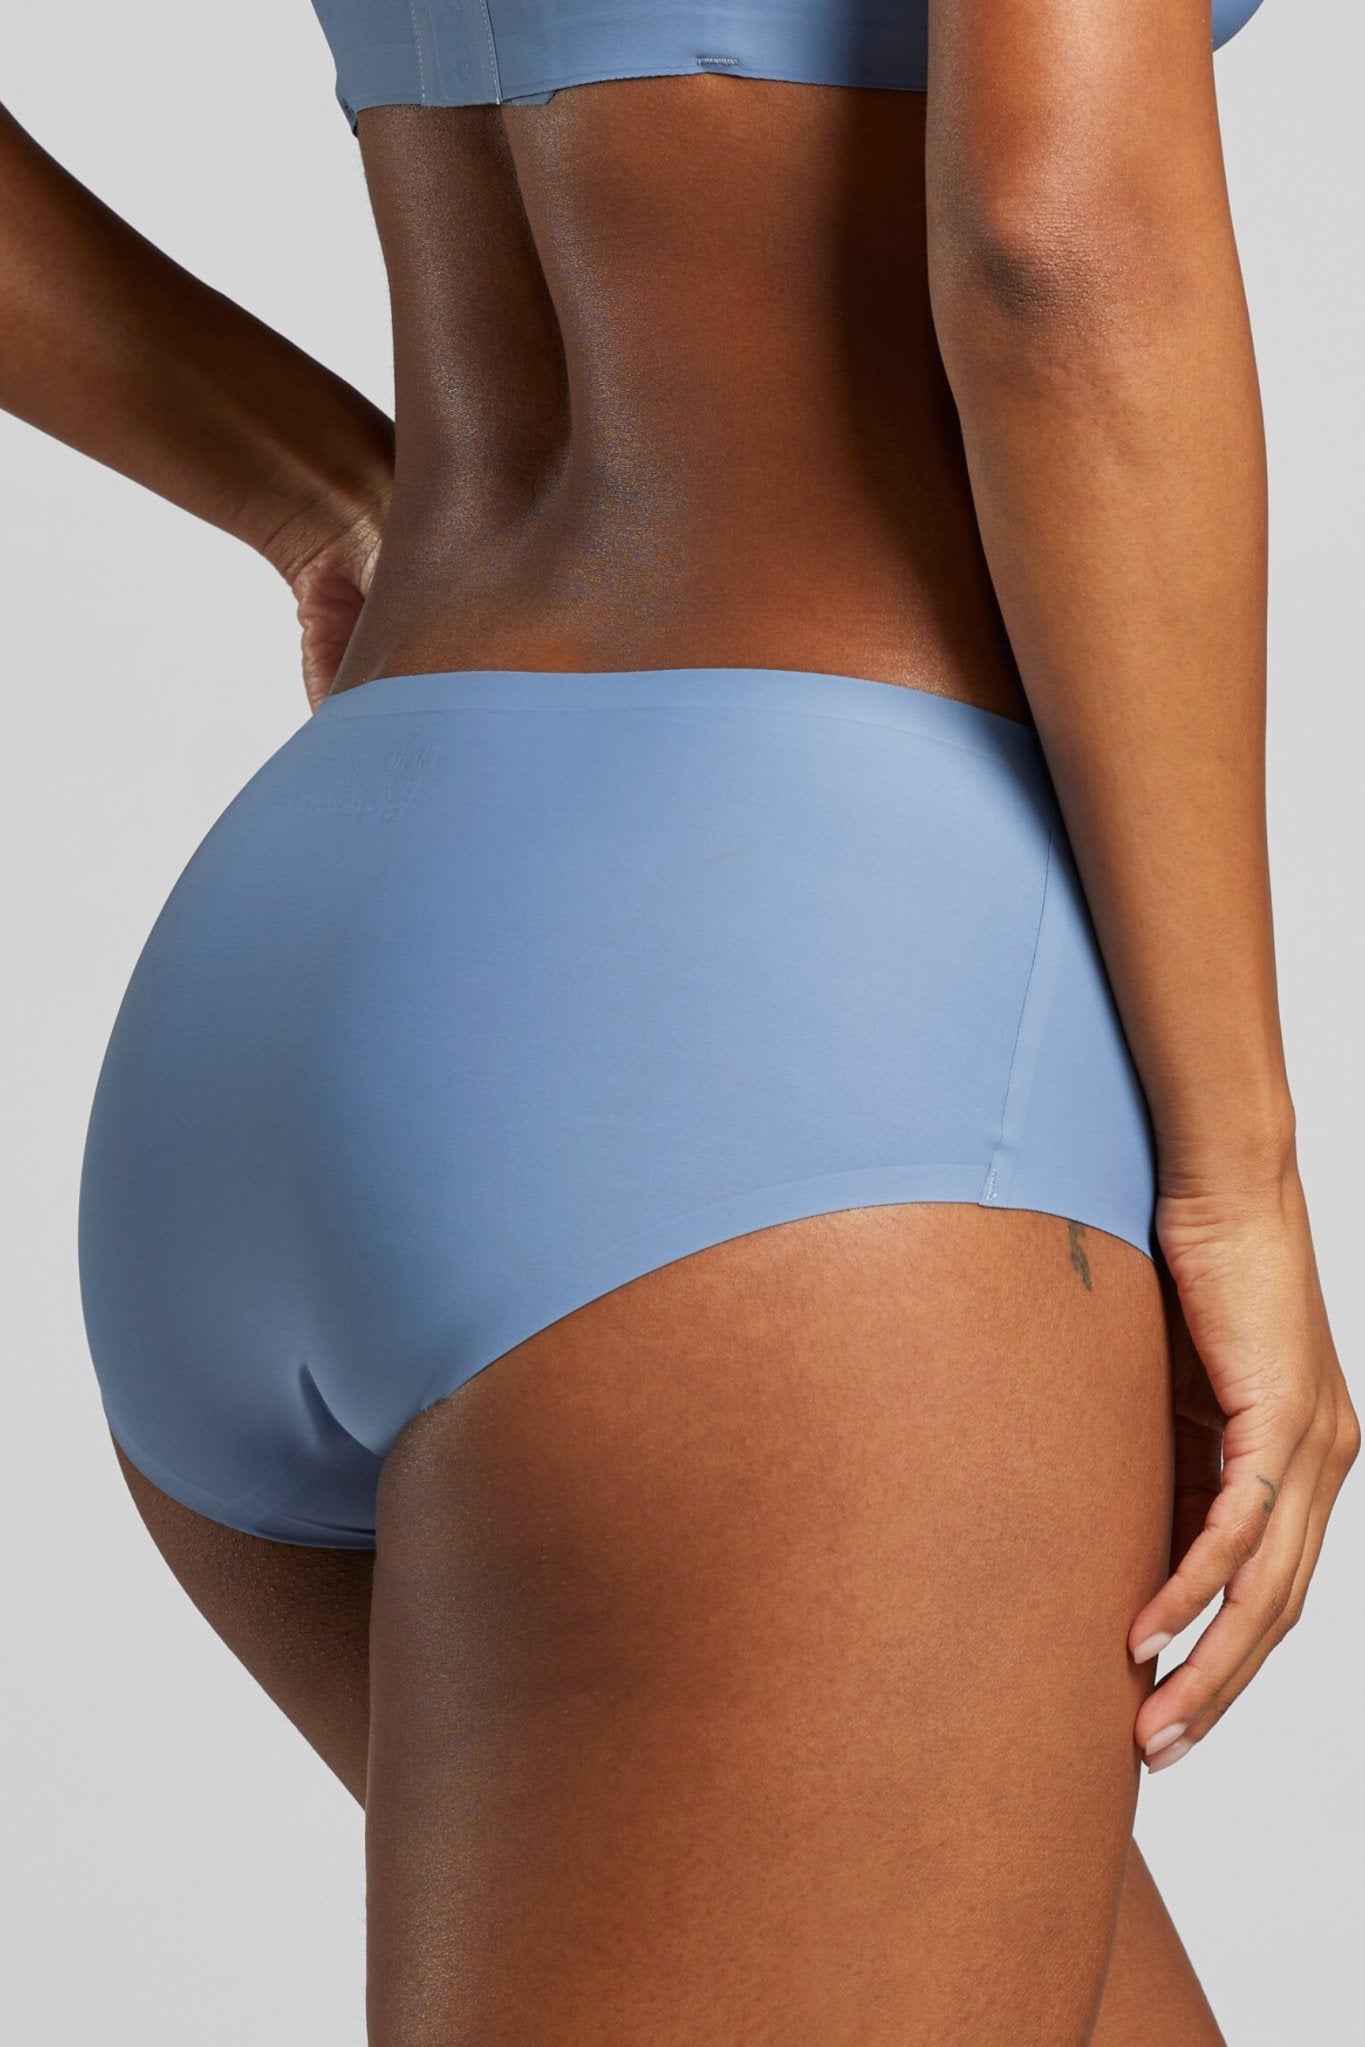 Hotsail Sexy Women's Modal Briefs Panties Lingerie Bikini Seamless Underwear  6 Colors on Luulla